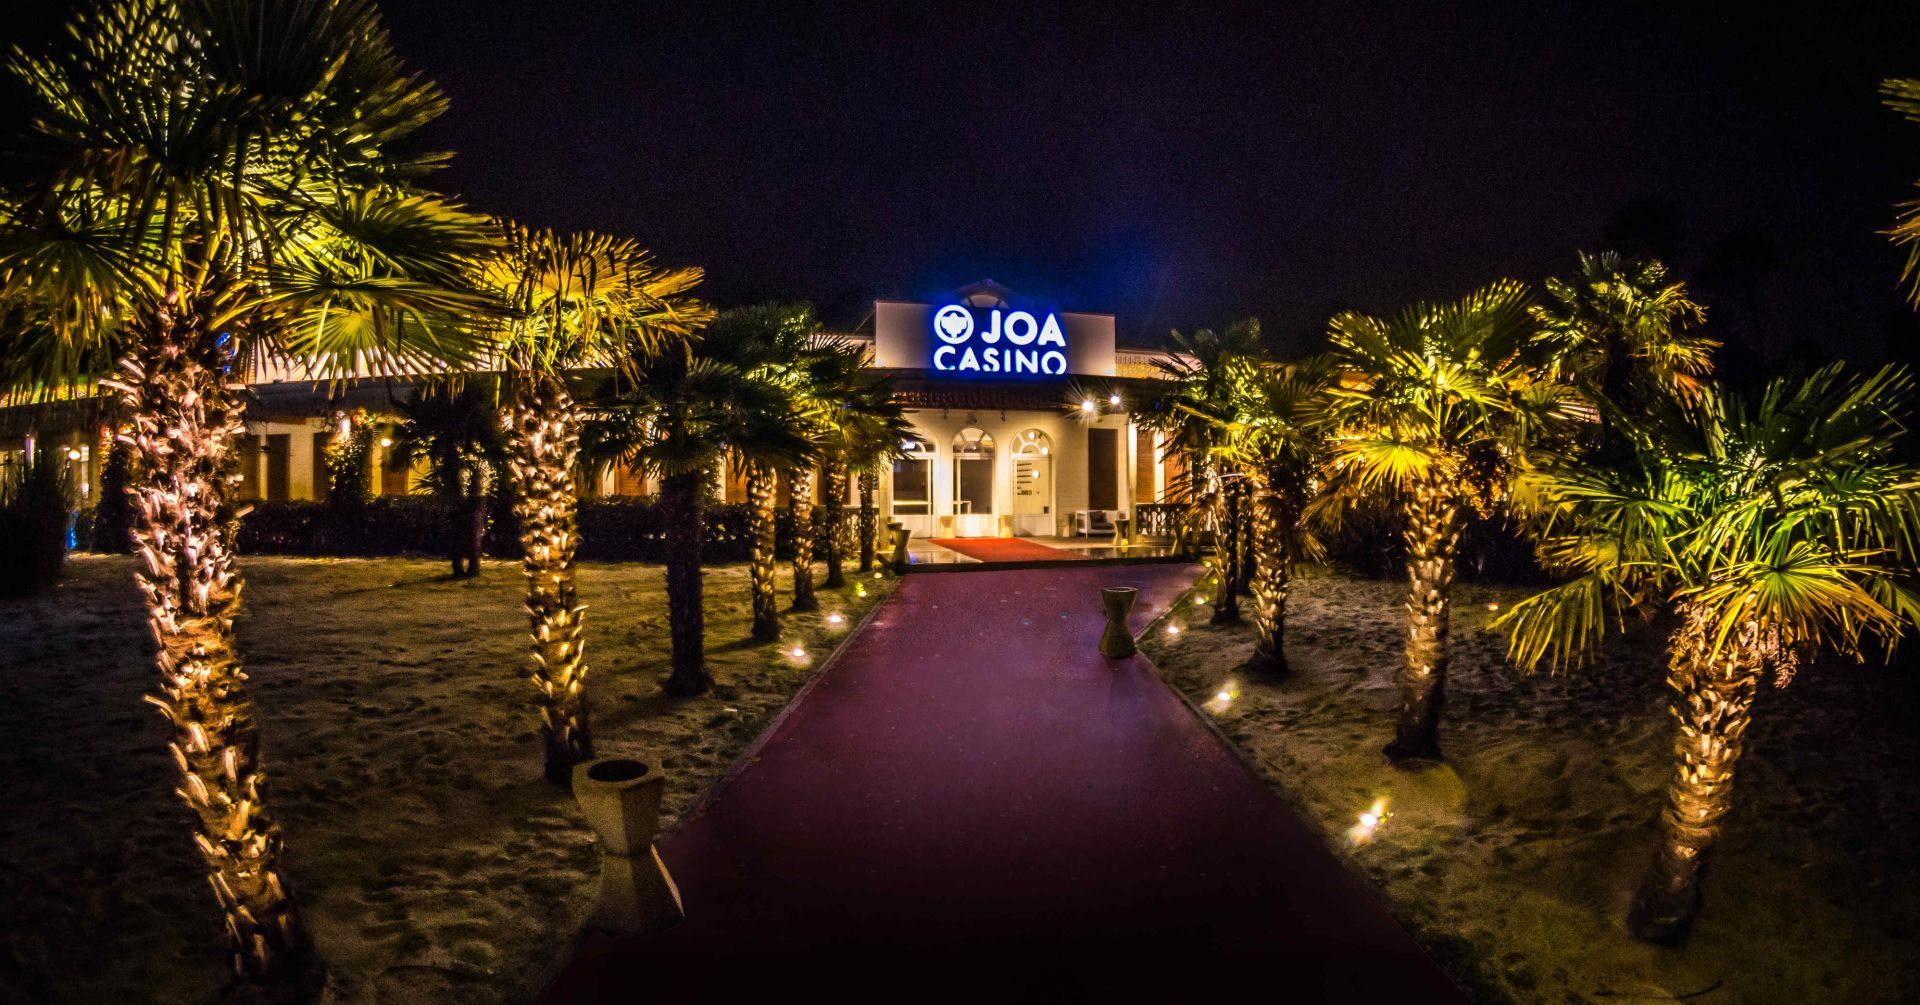 Casino JOA Gujan⁃Mestras